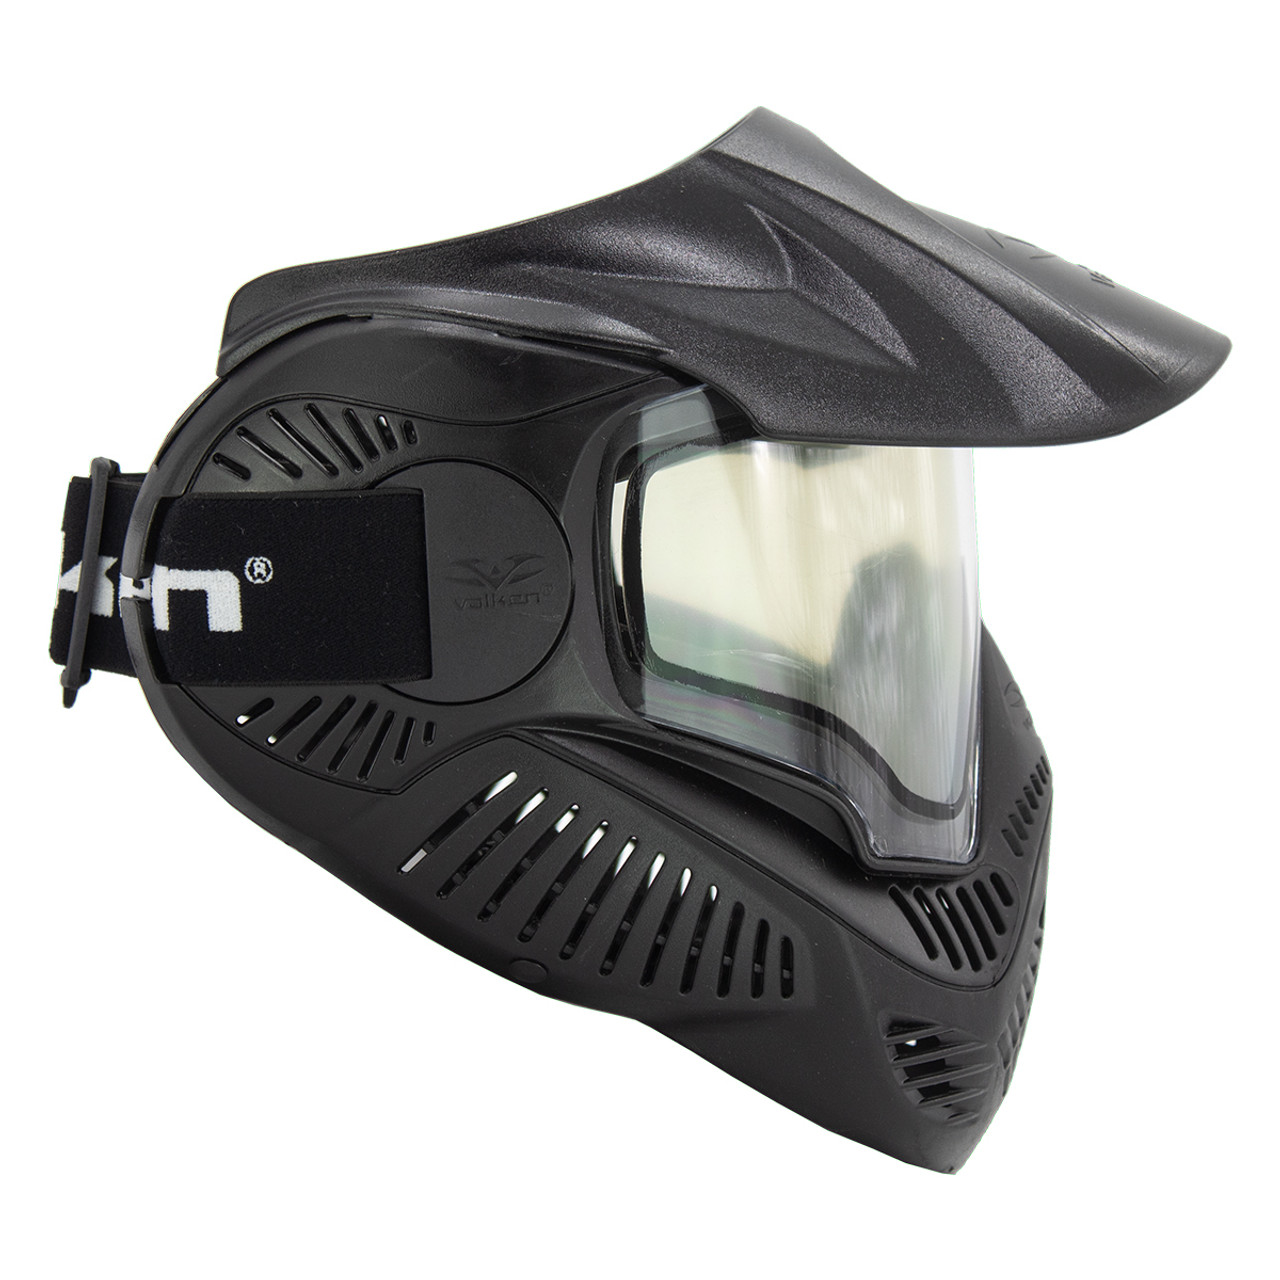 Valken MI-7 Goggle Thermal, Black